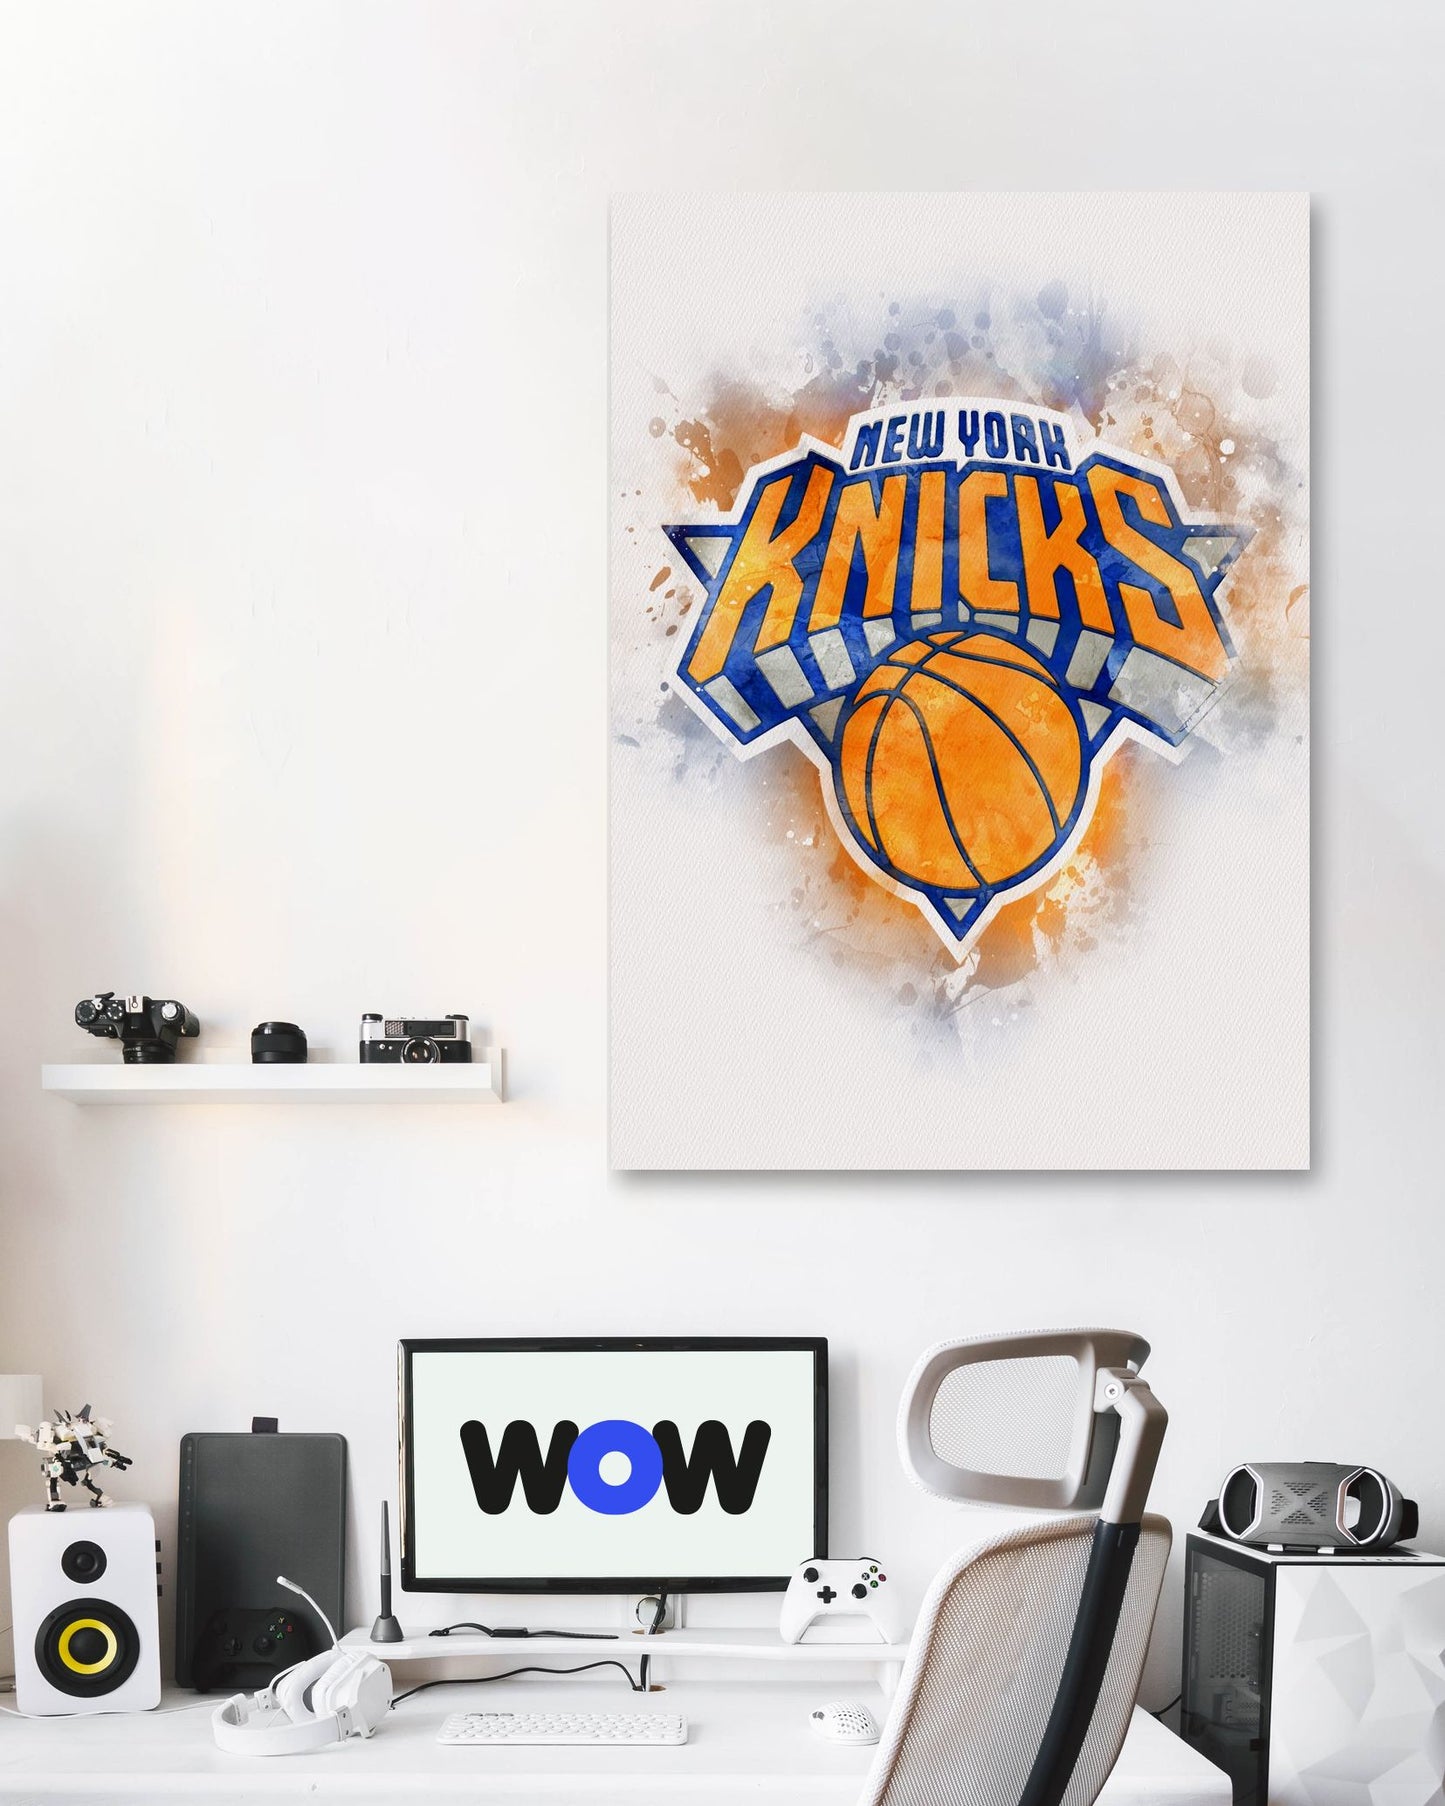 New York Knicks - @ArtStyle